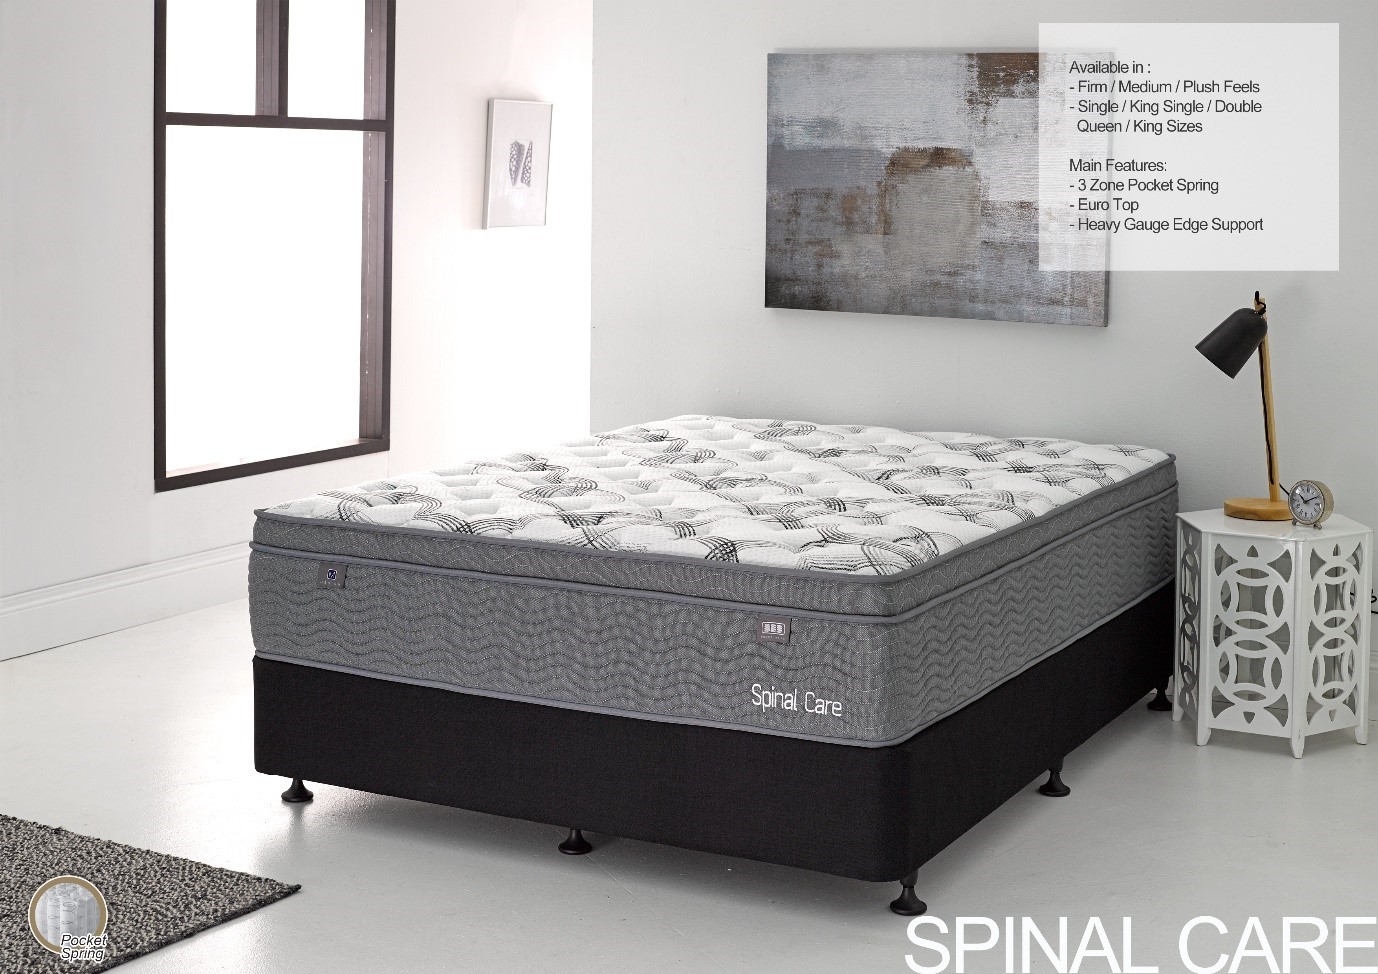 spinal care mattress reviews